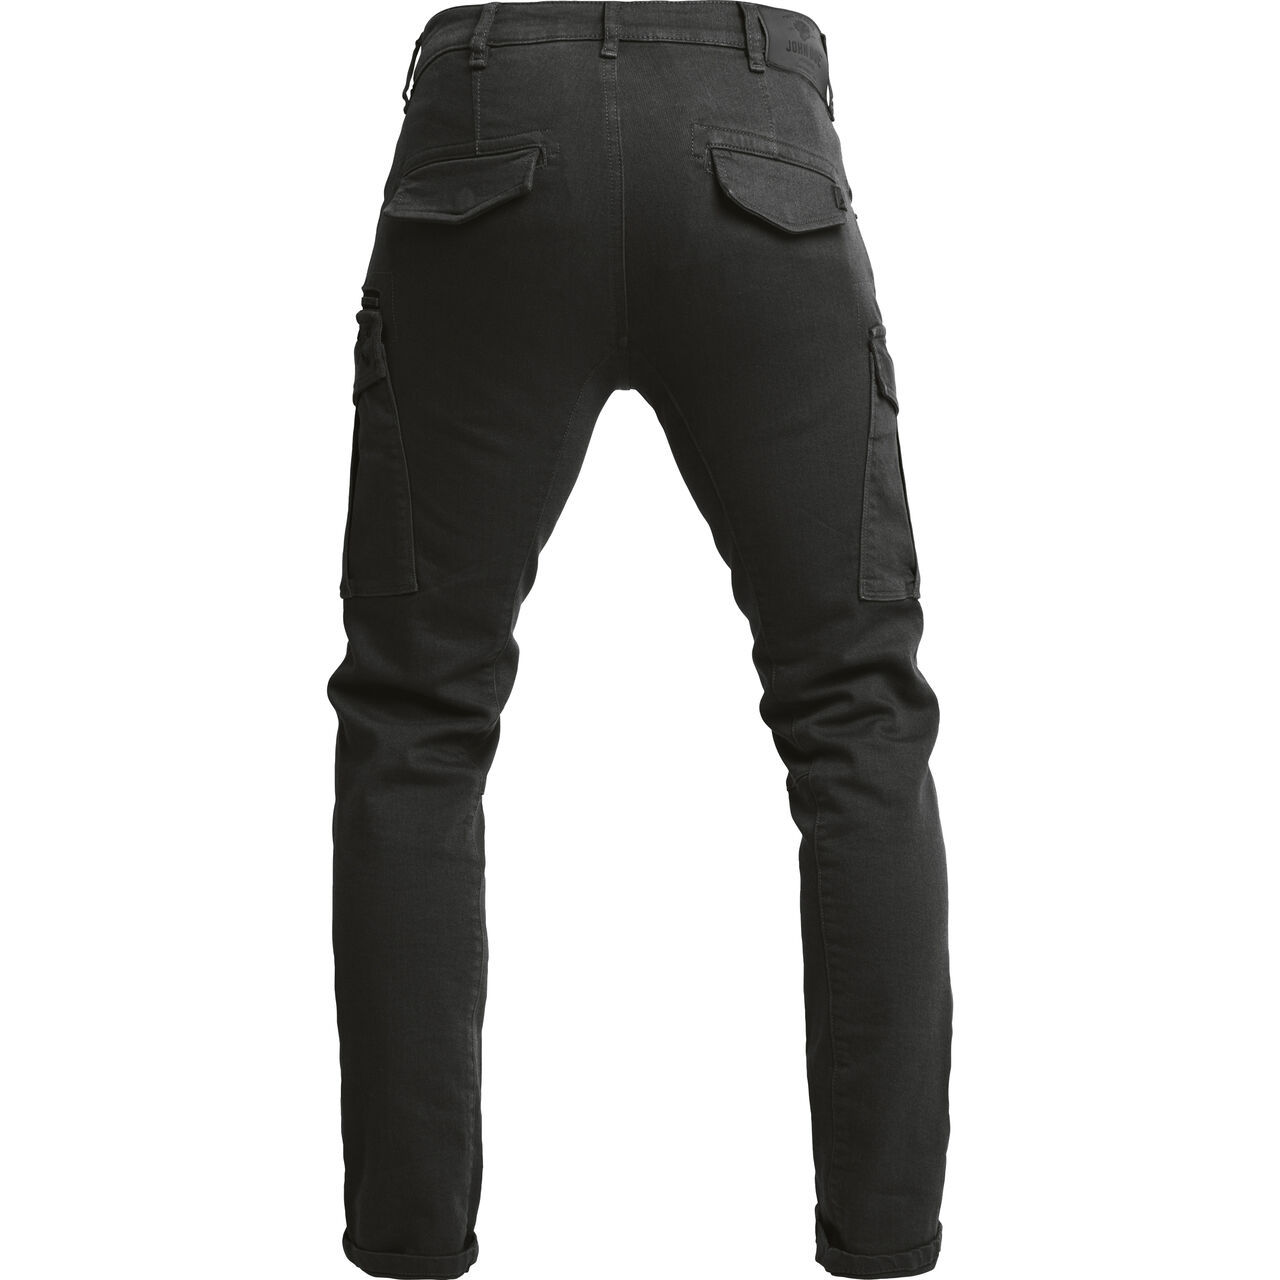 Defender Mono Jeans black 30/34